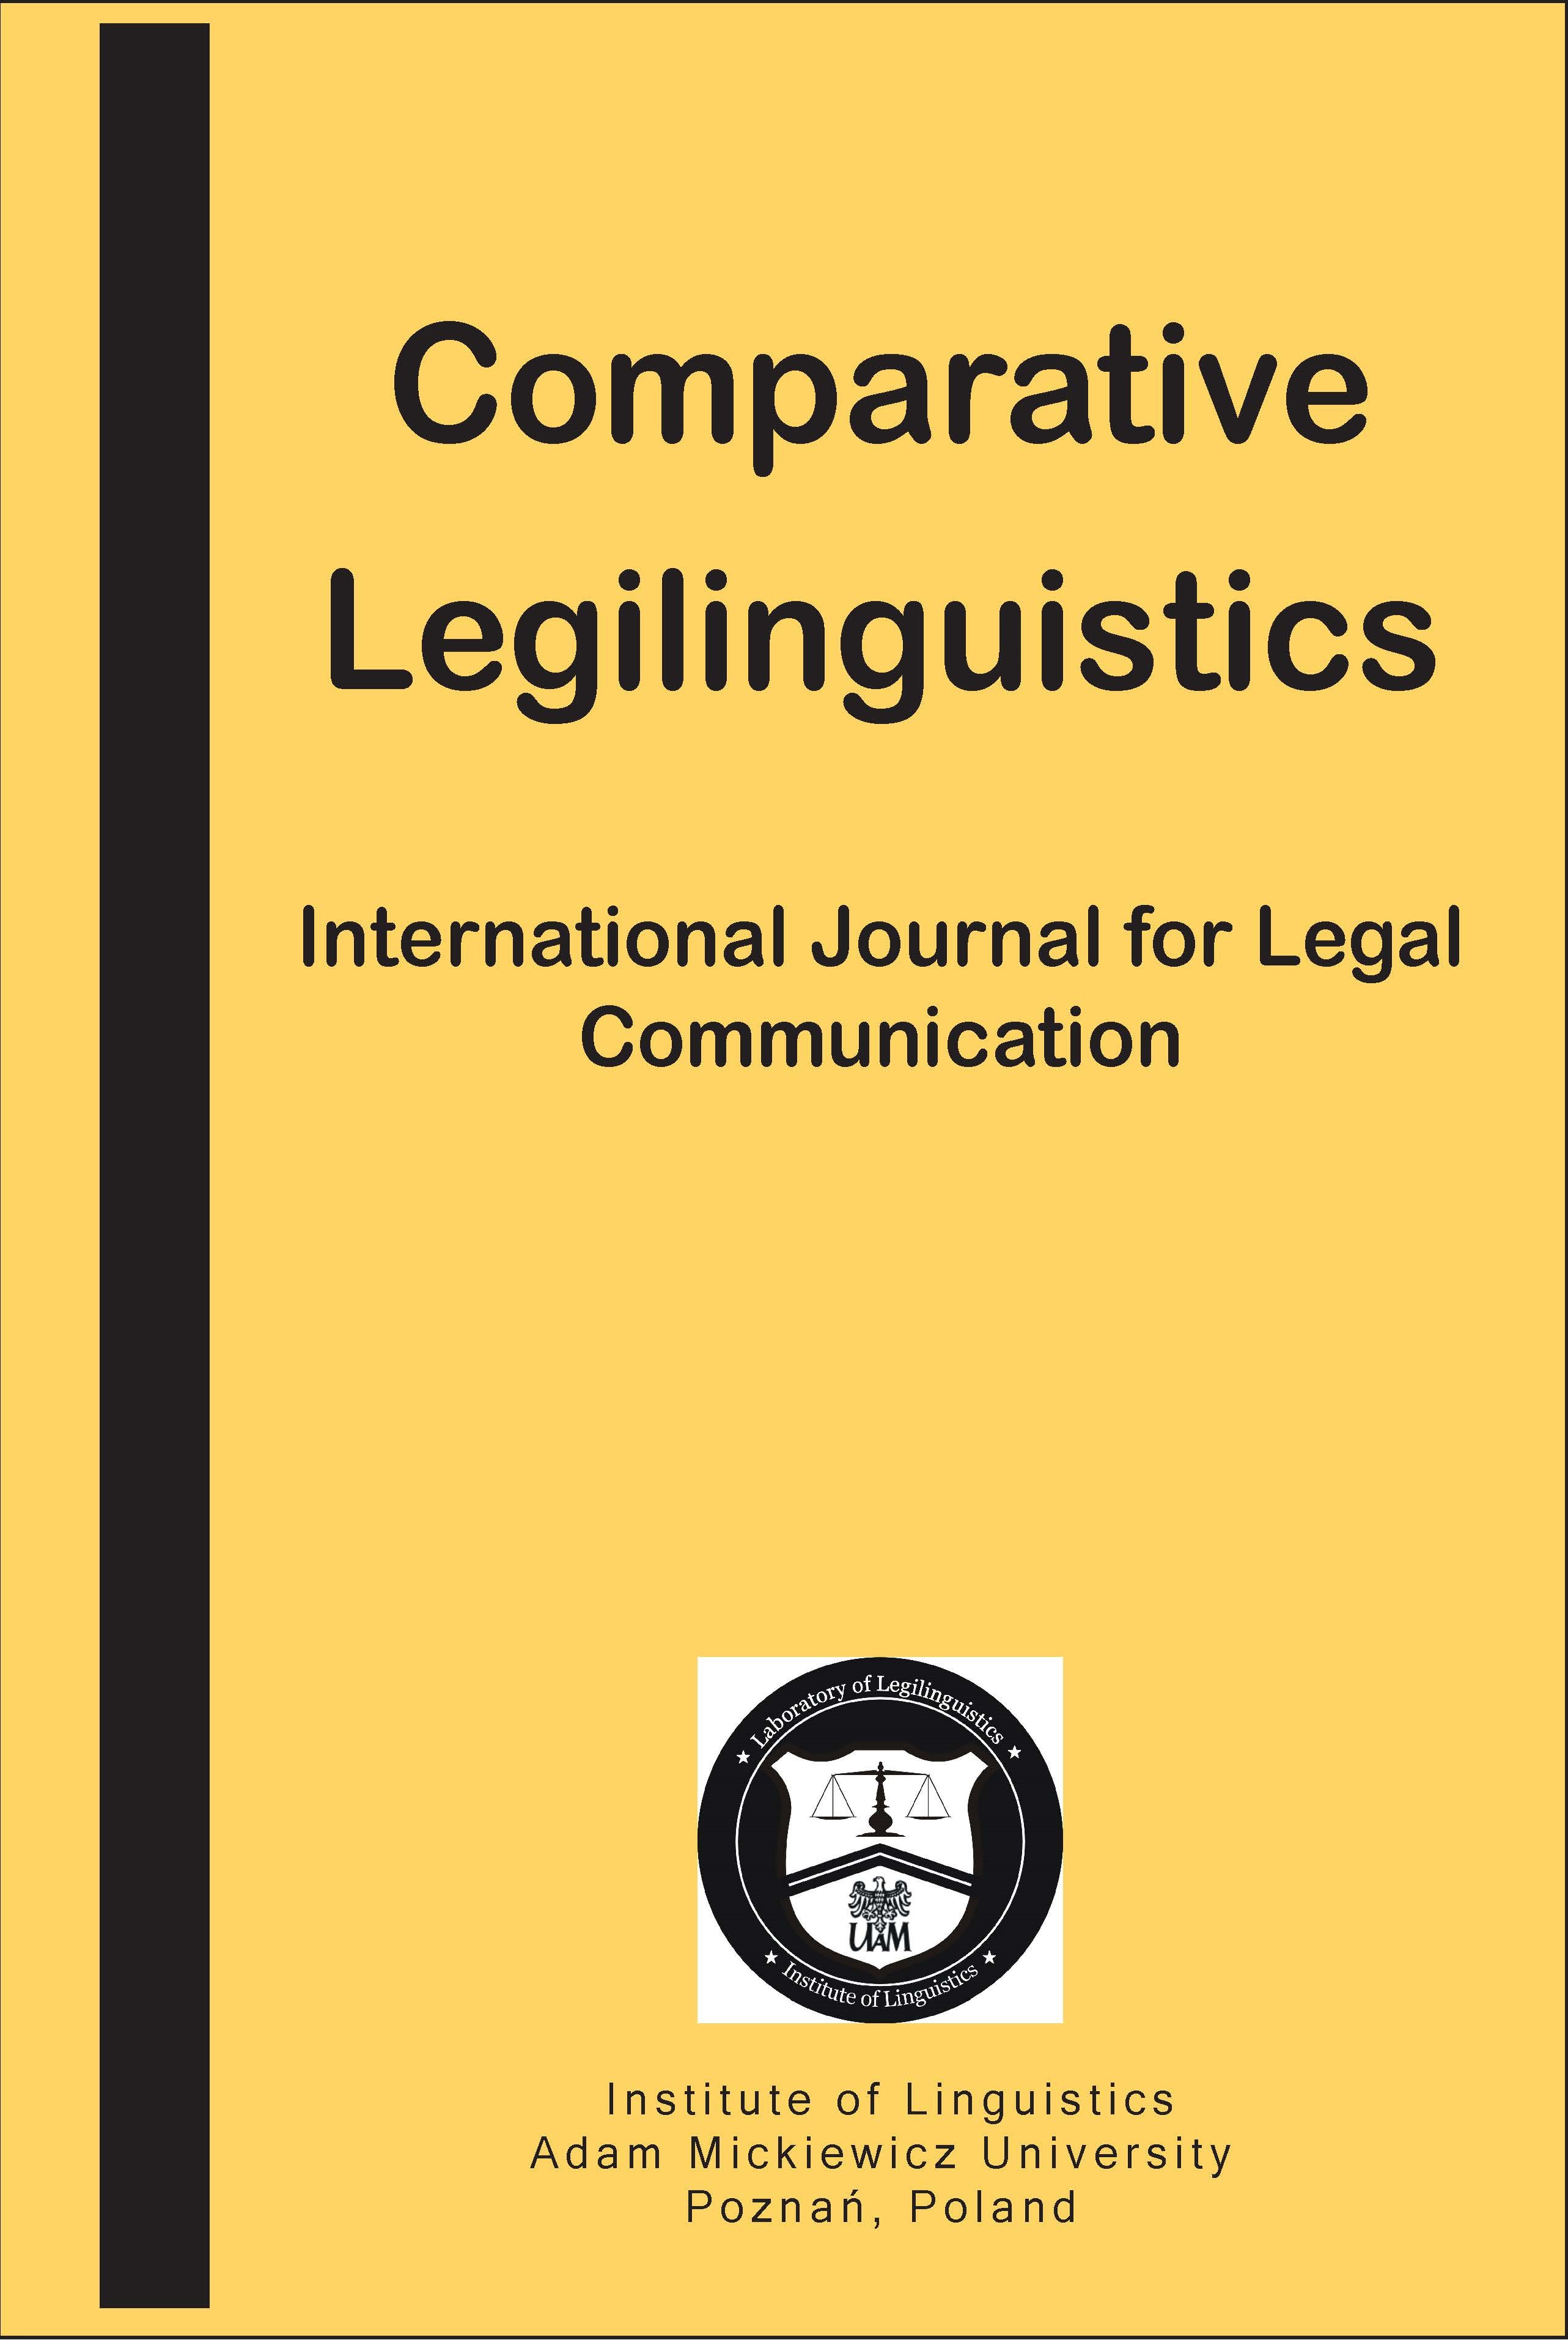 Foundations of pragmatic legal linguistics